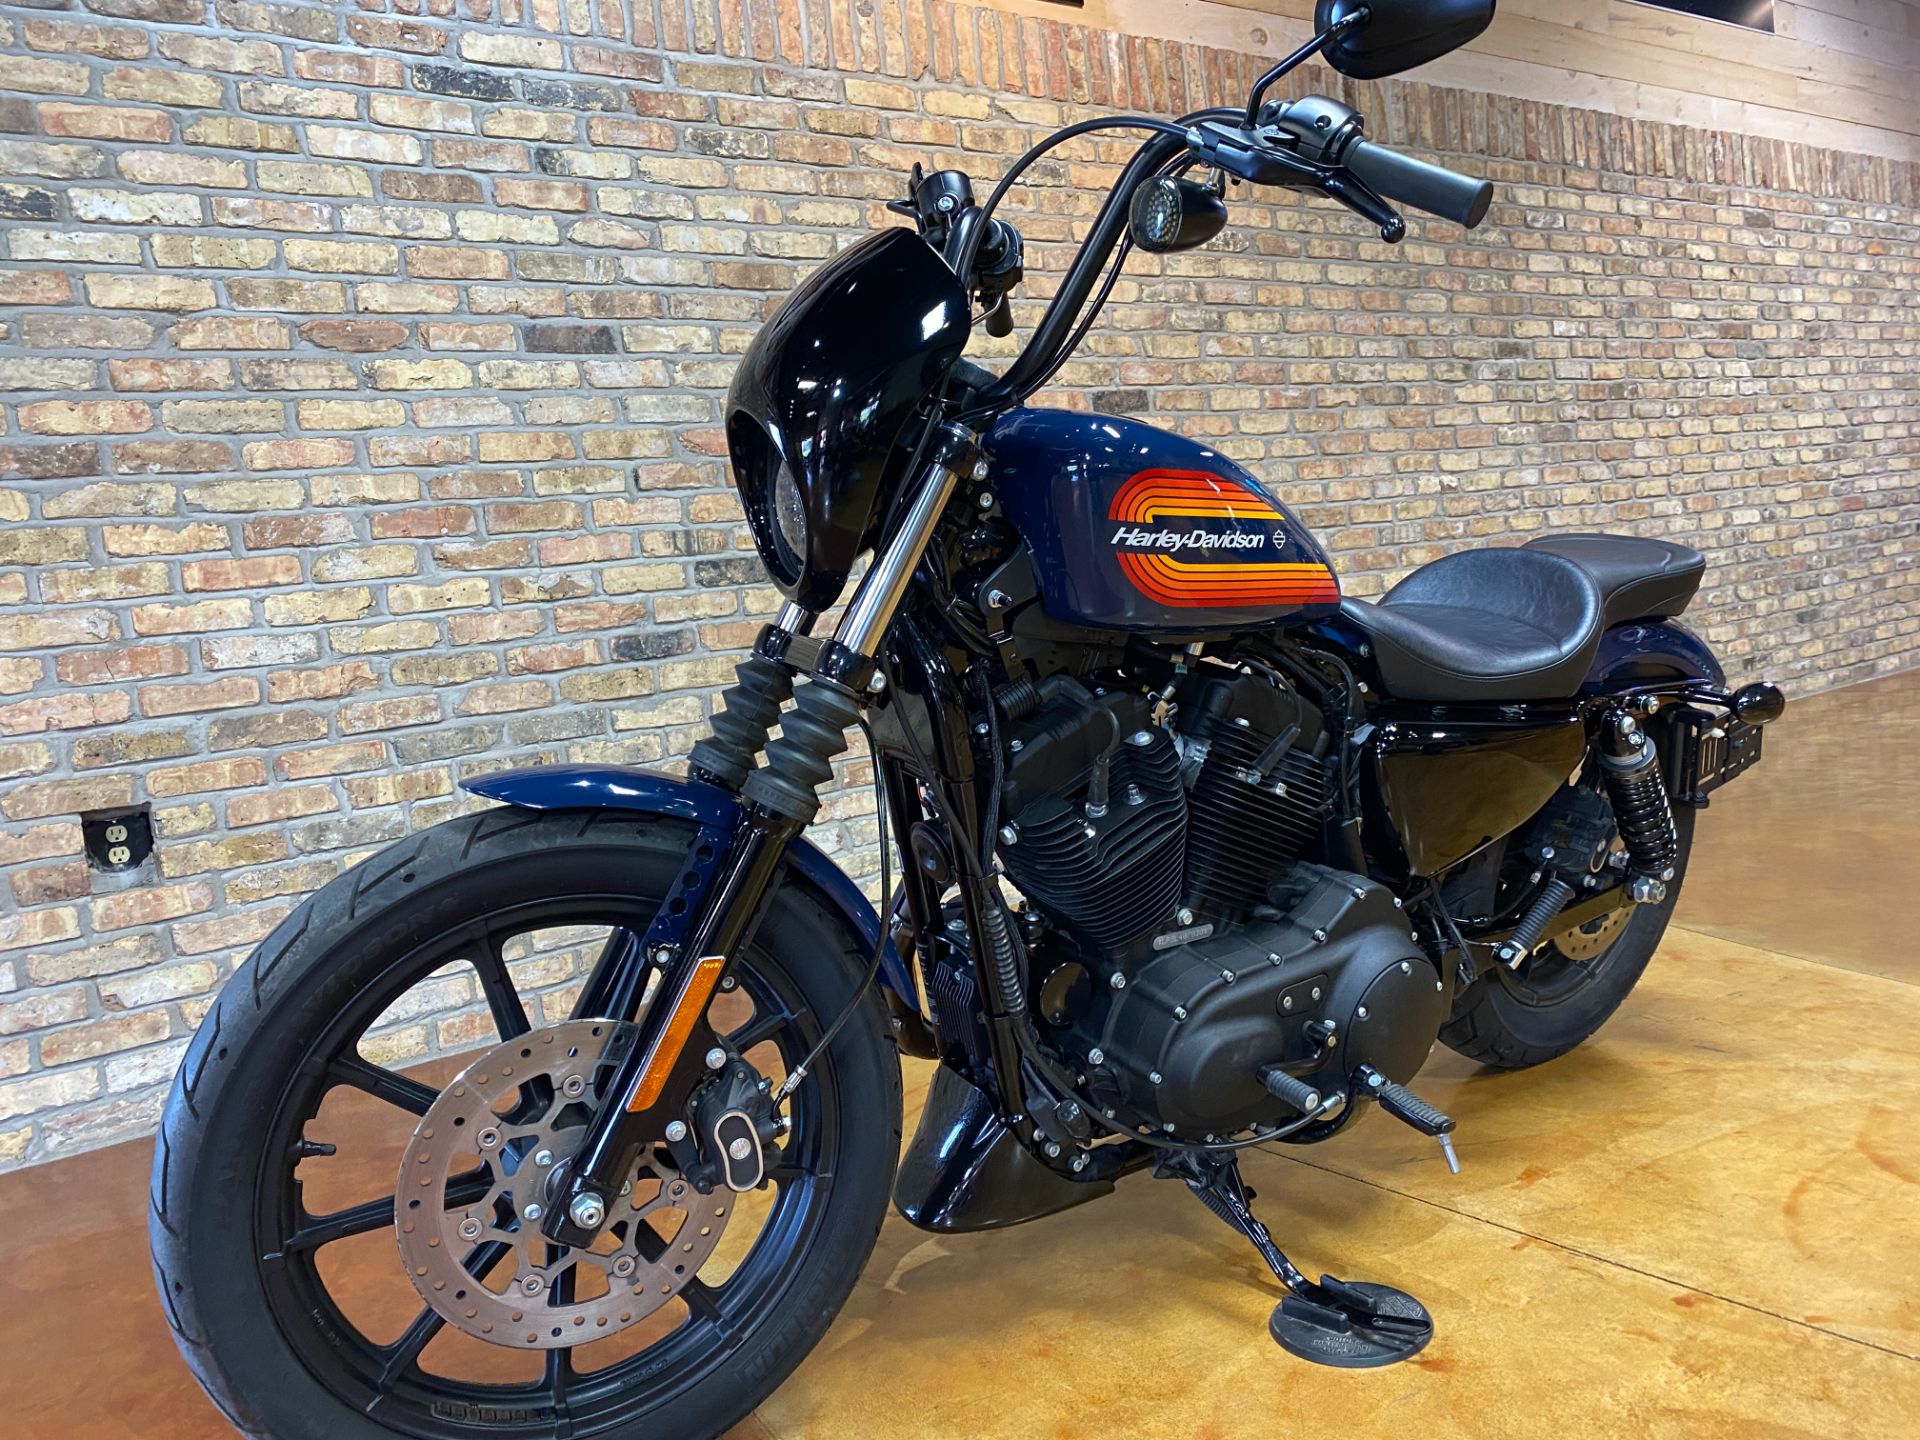 2020 Harley-Davidson Iron 1200™ in Big Bend, Wisconsin - Photo 16